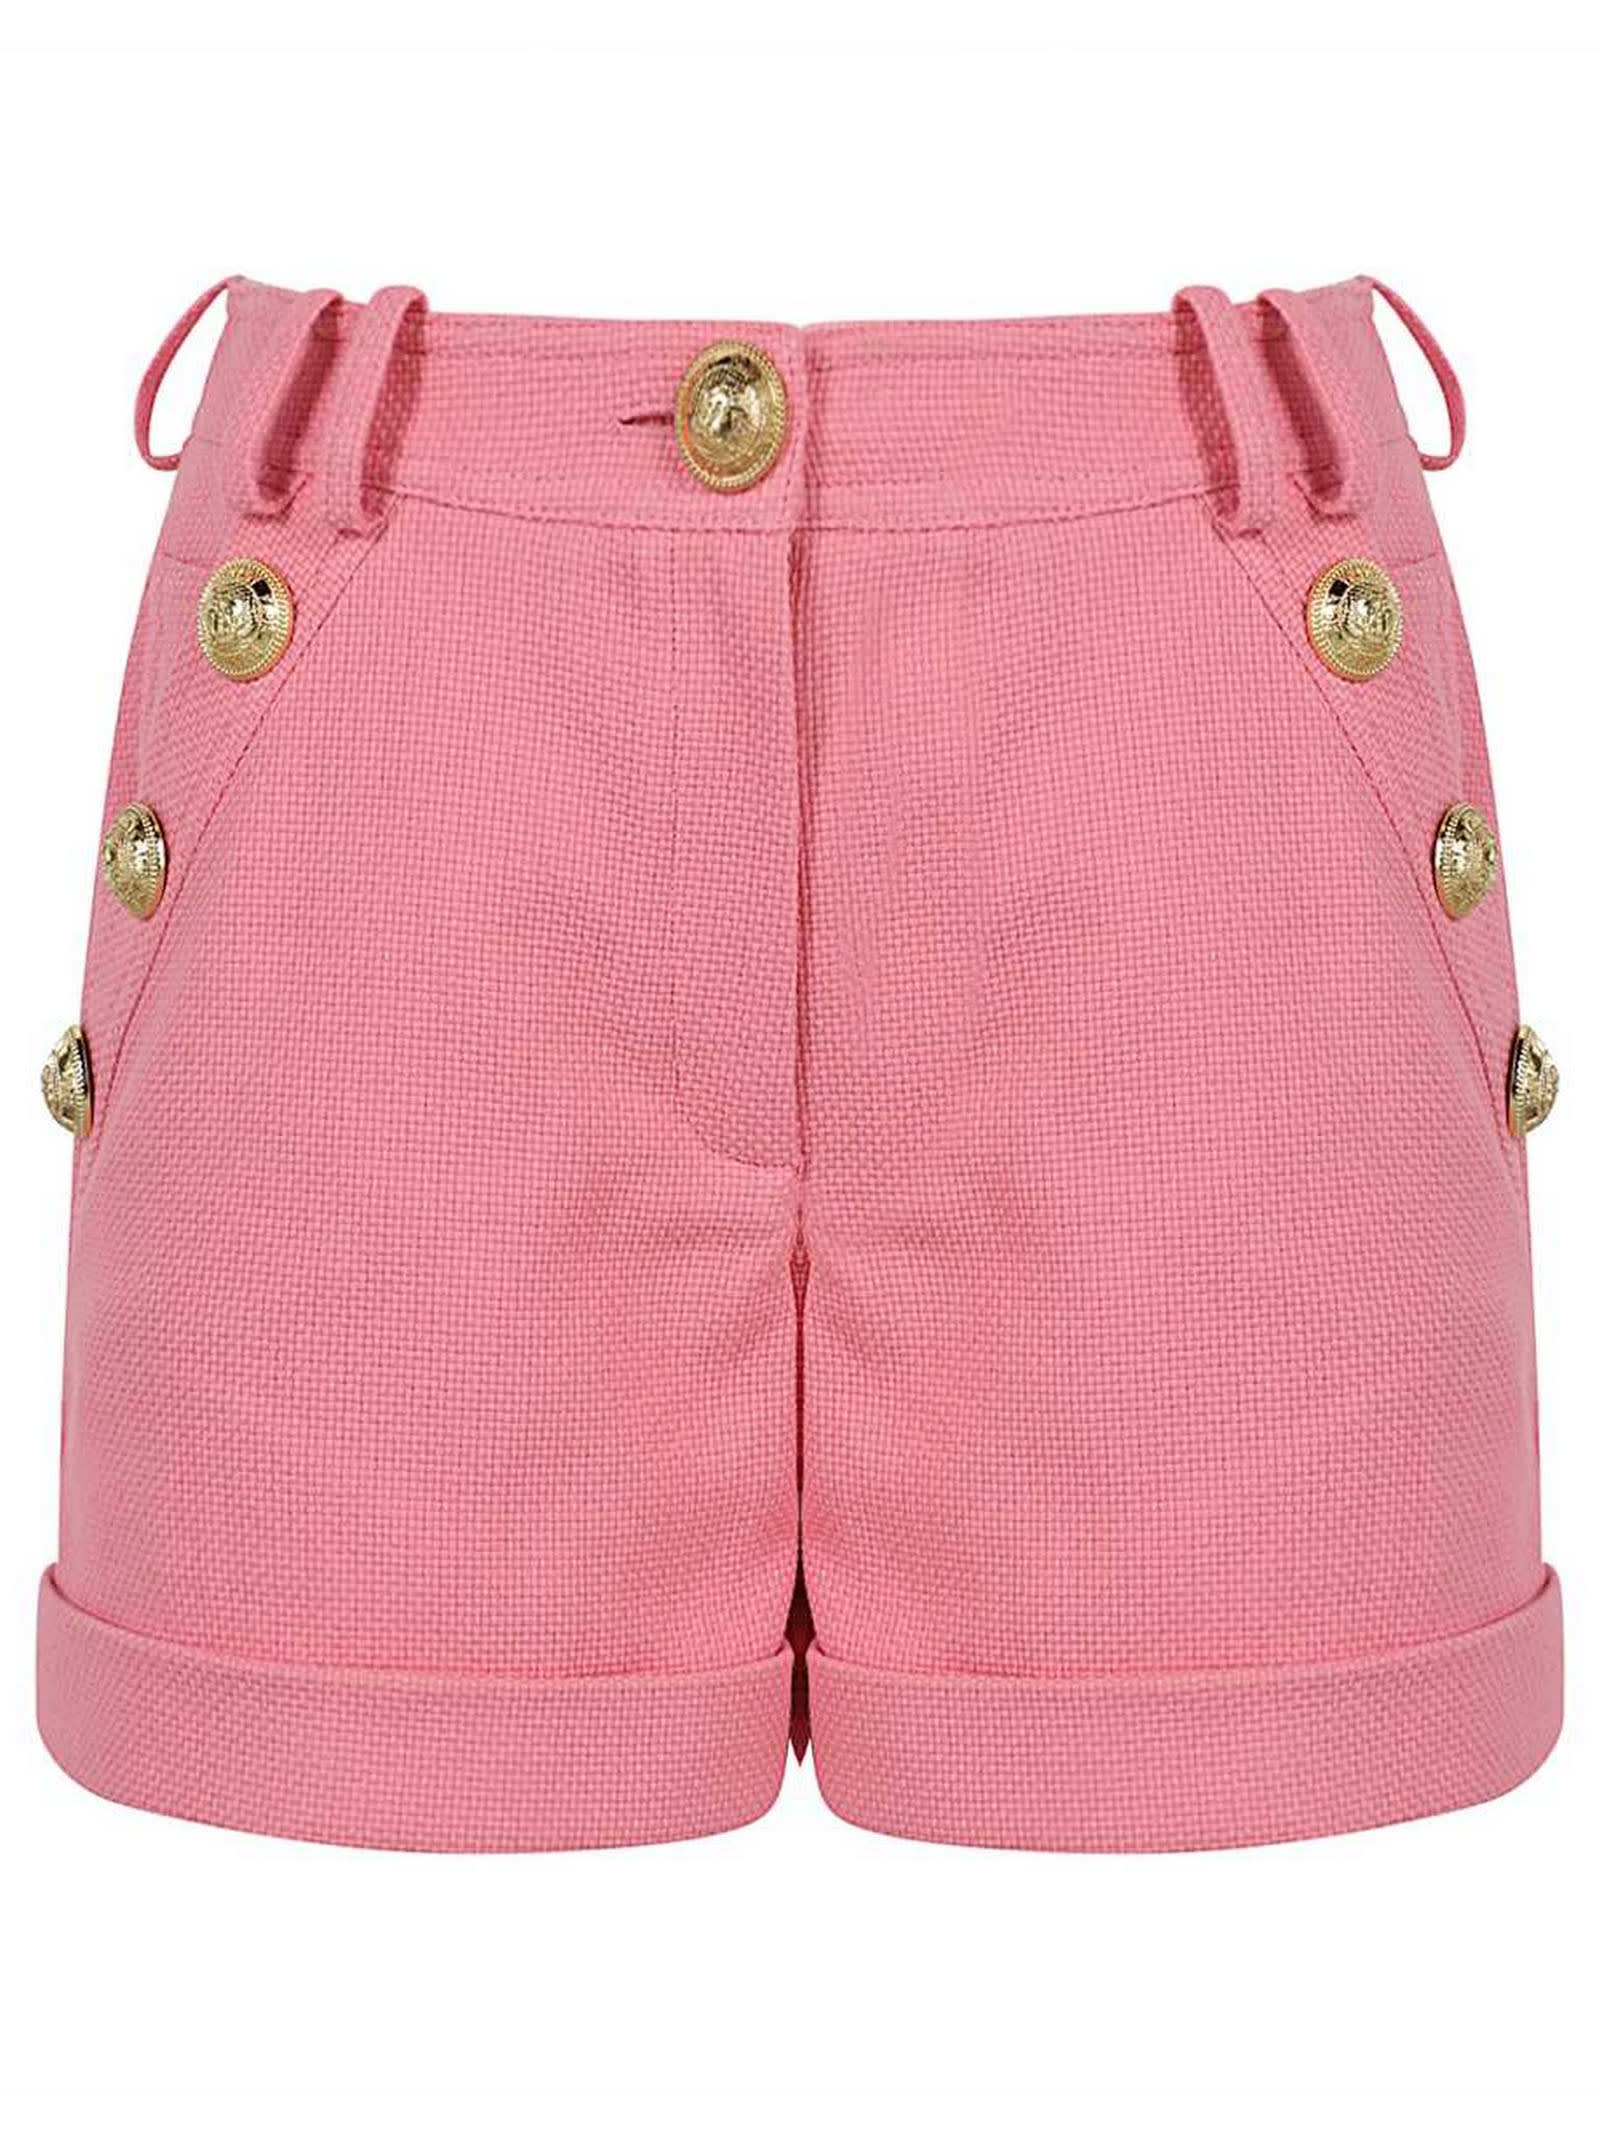 Balmain Rose Pink Cotton Shorts